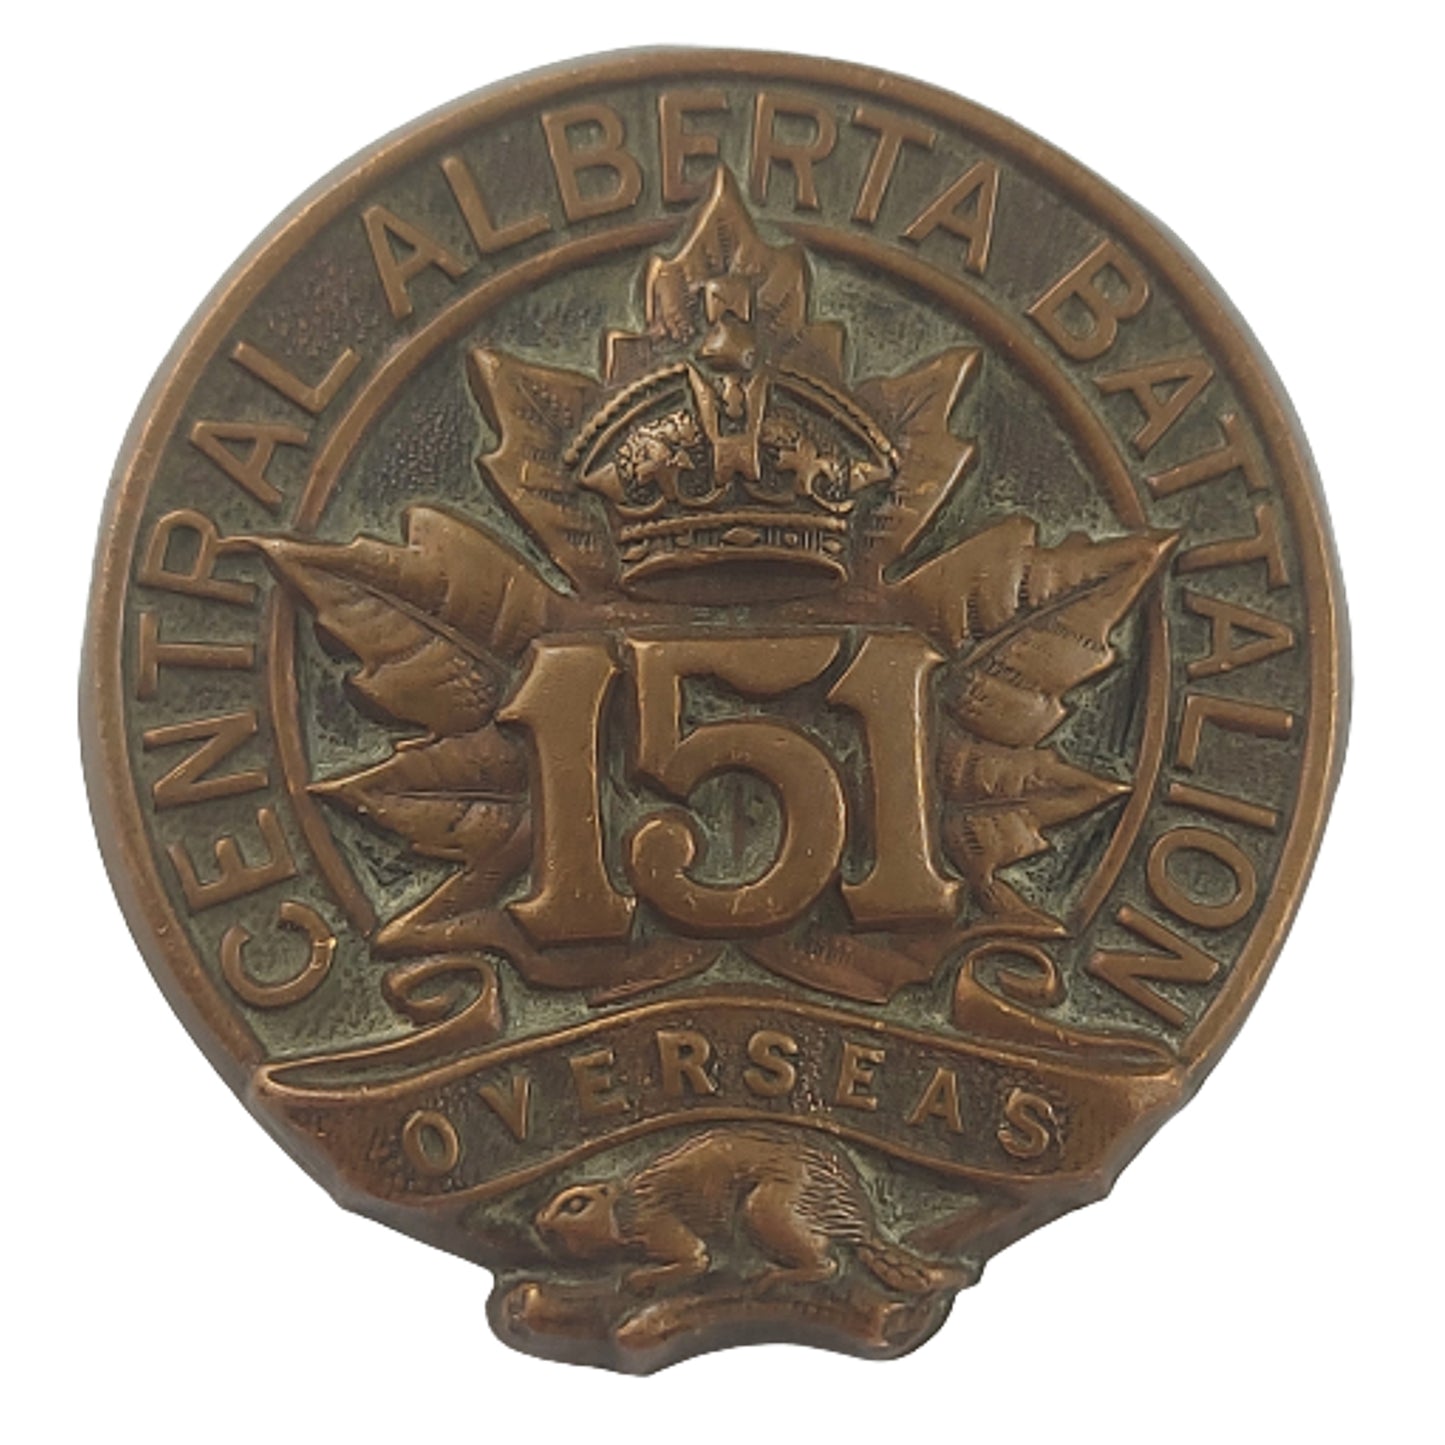 WW1 Canadian 151st Battalion Cap Badge - Central Alberta Battalion